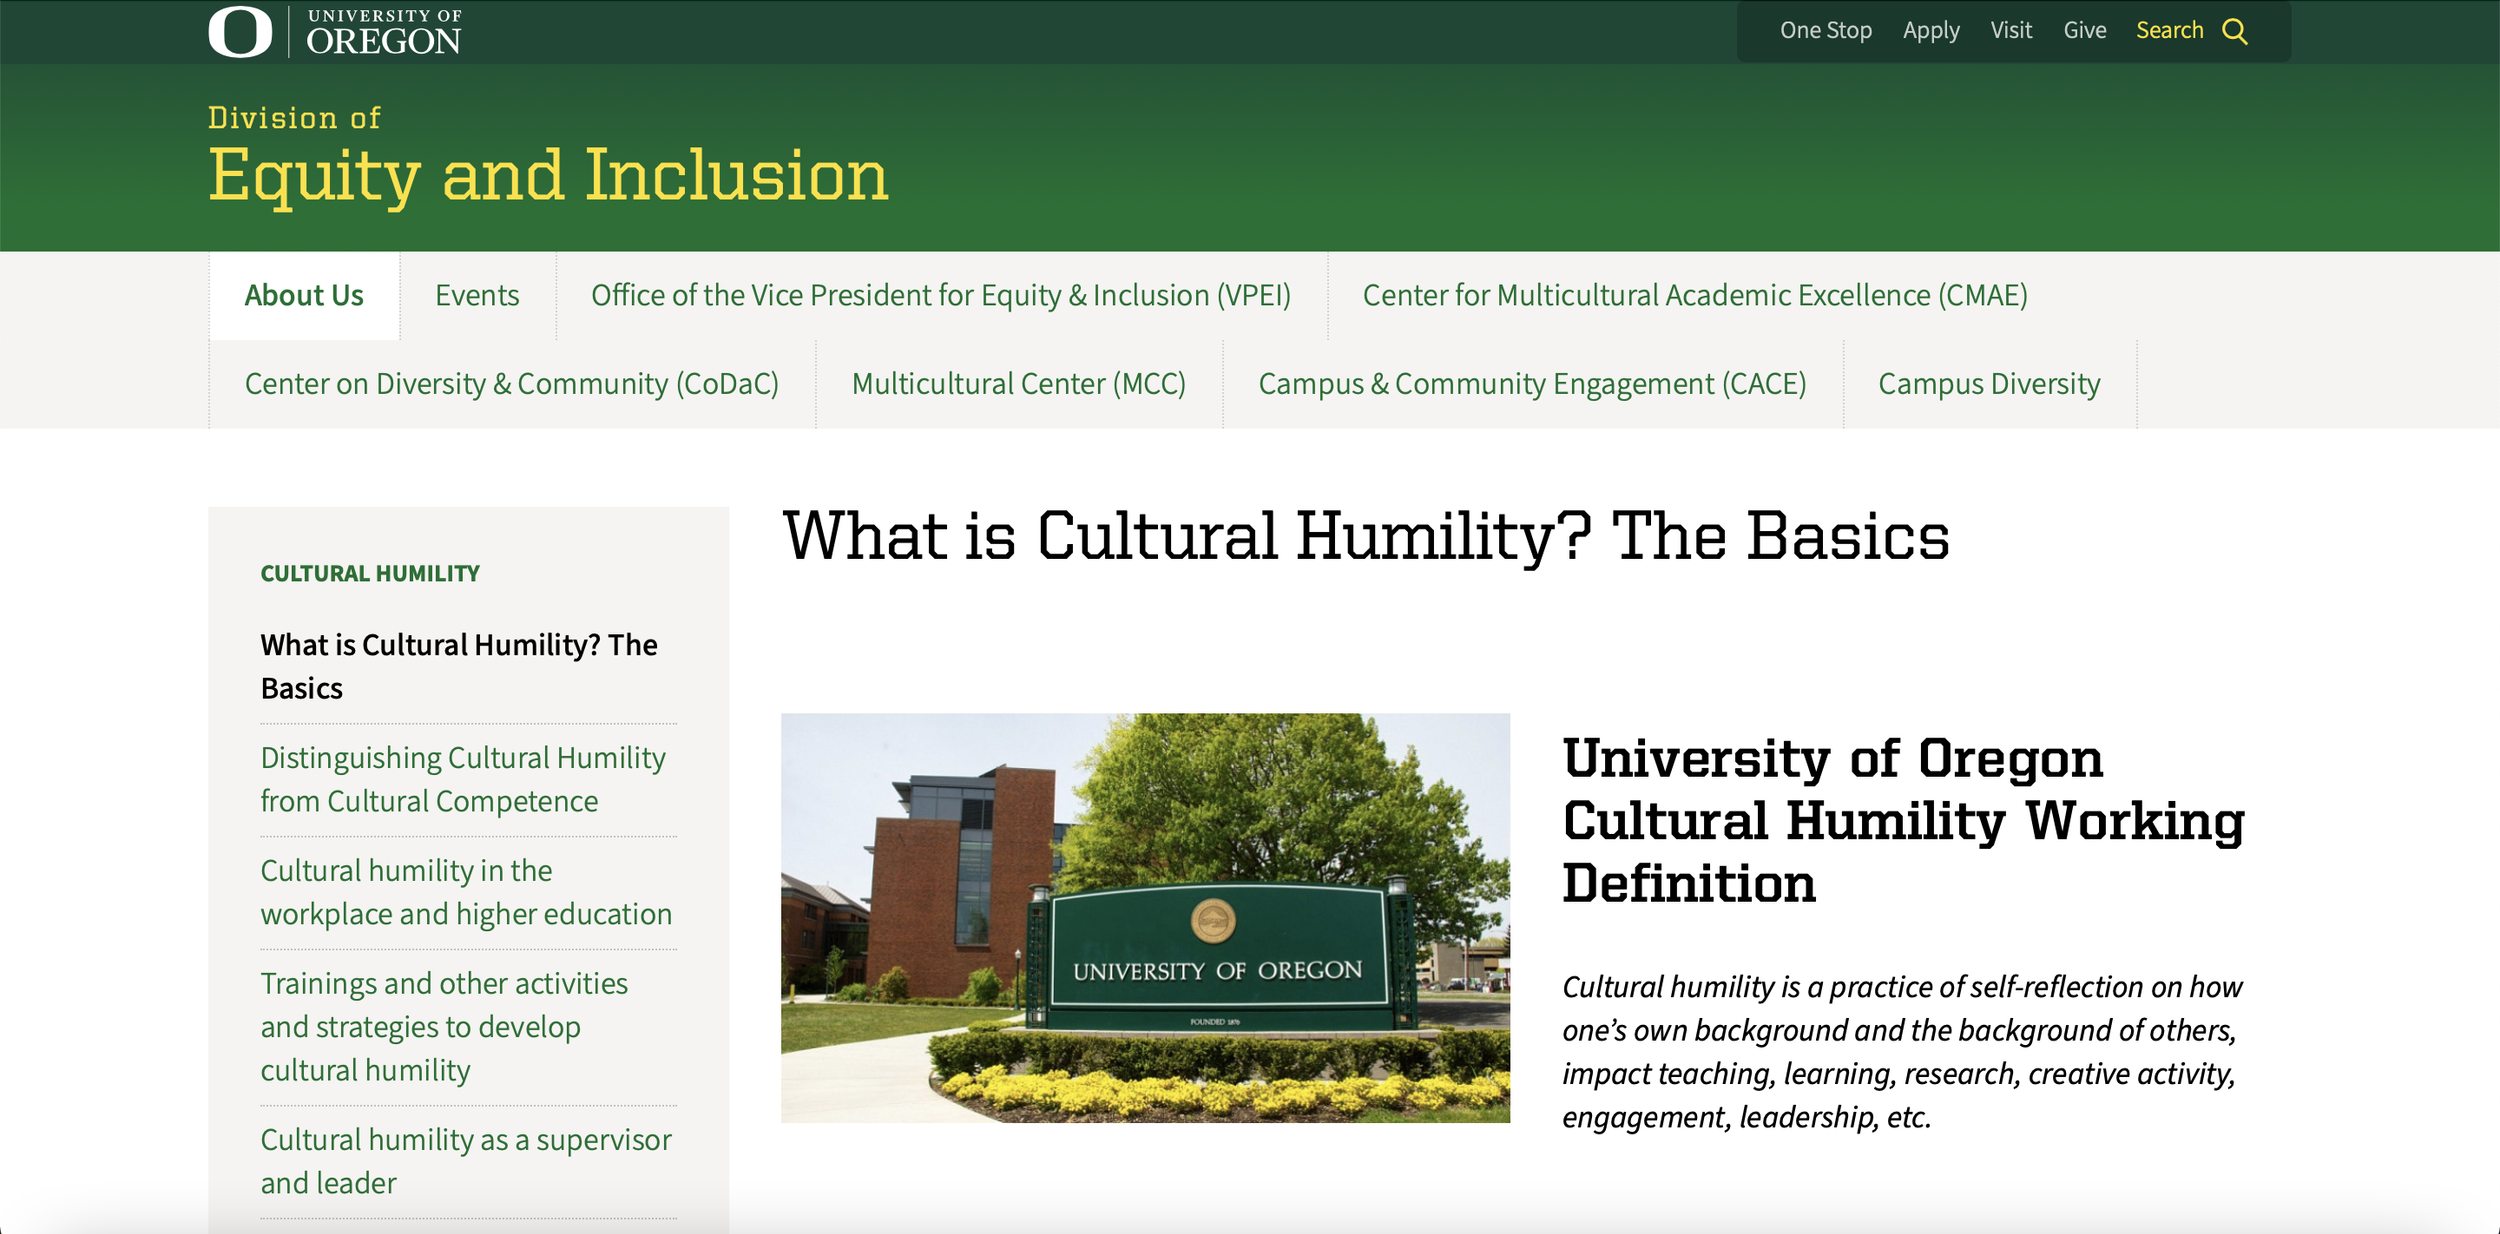 University of Oregon - Cultural Humility